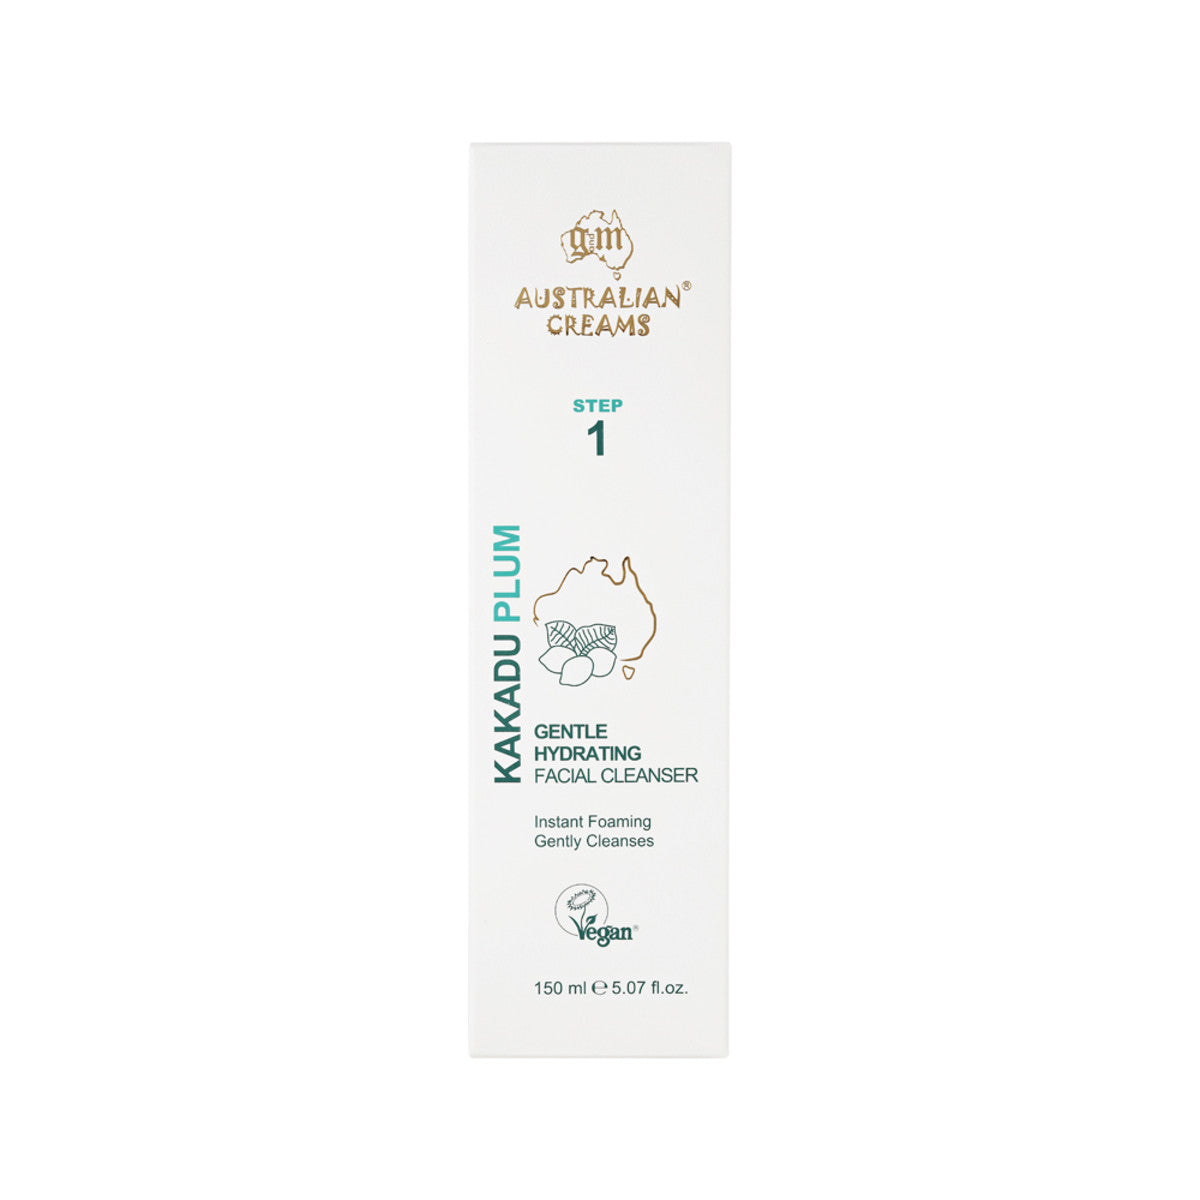 Australian Creams - Kakadu Plum Facial Cleanser Gentle Hydrating